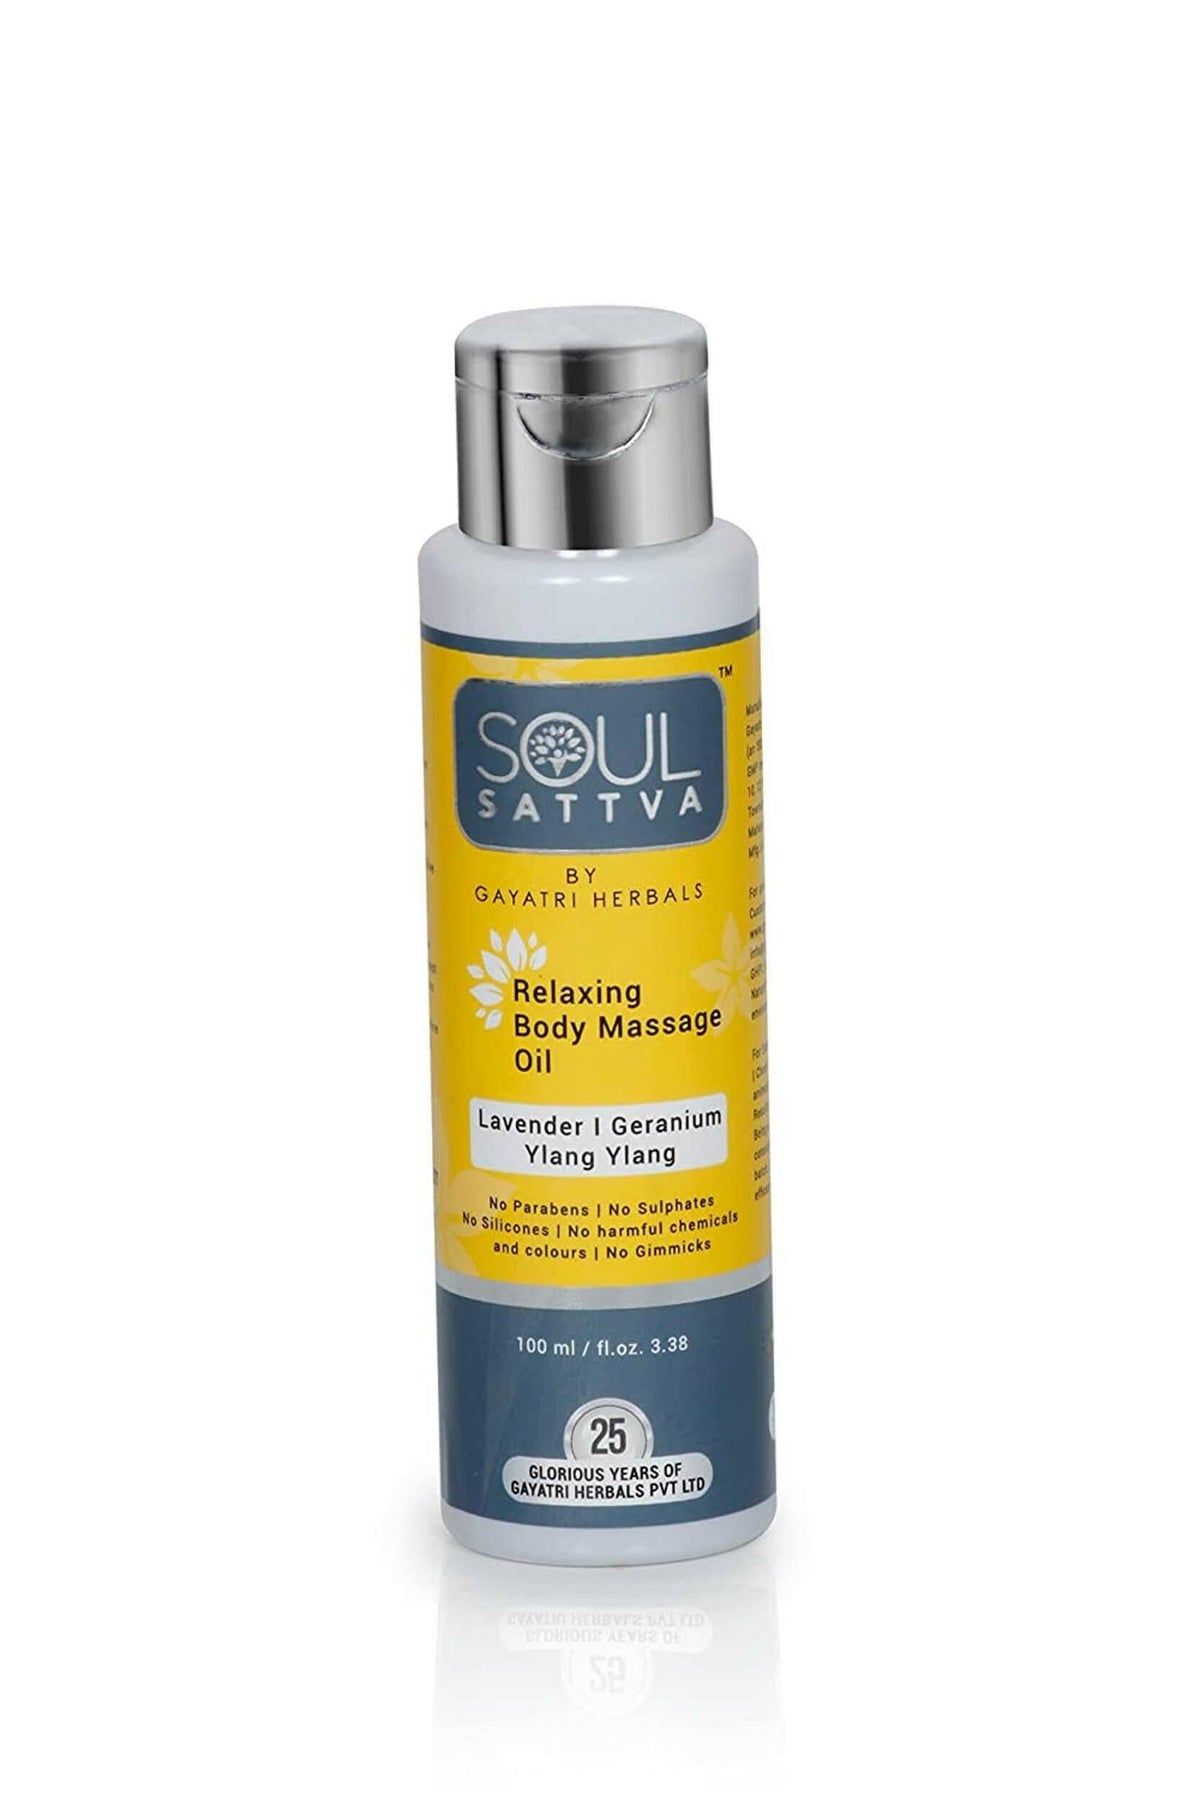 Soul Sattva Relaxing Body Massage Oil